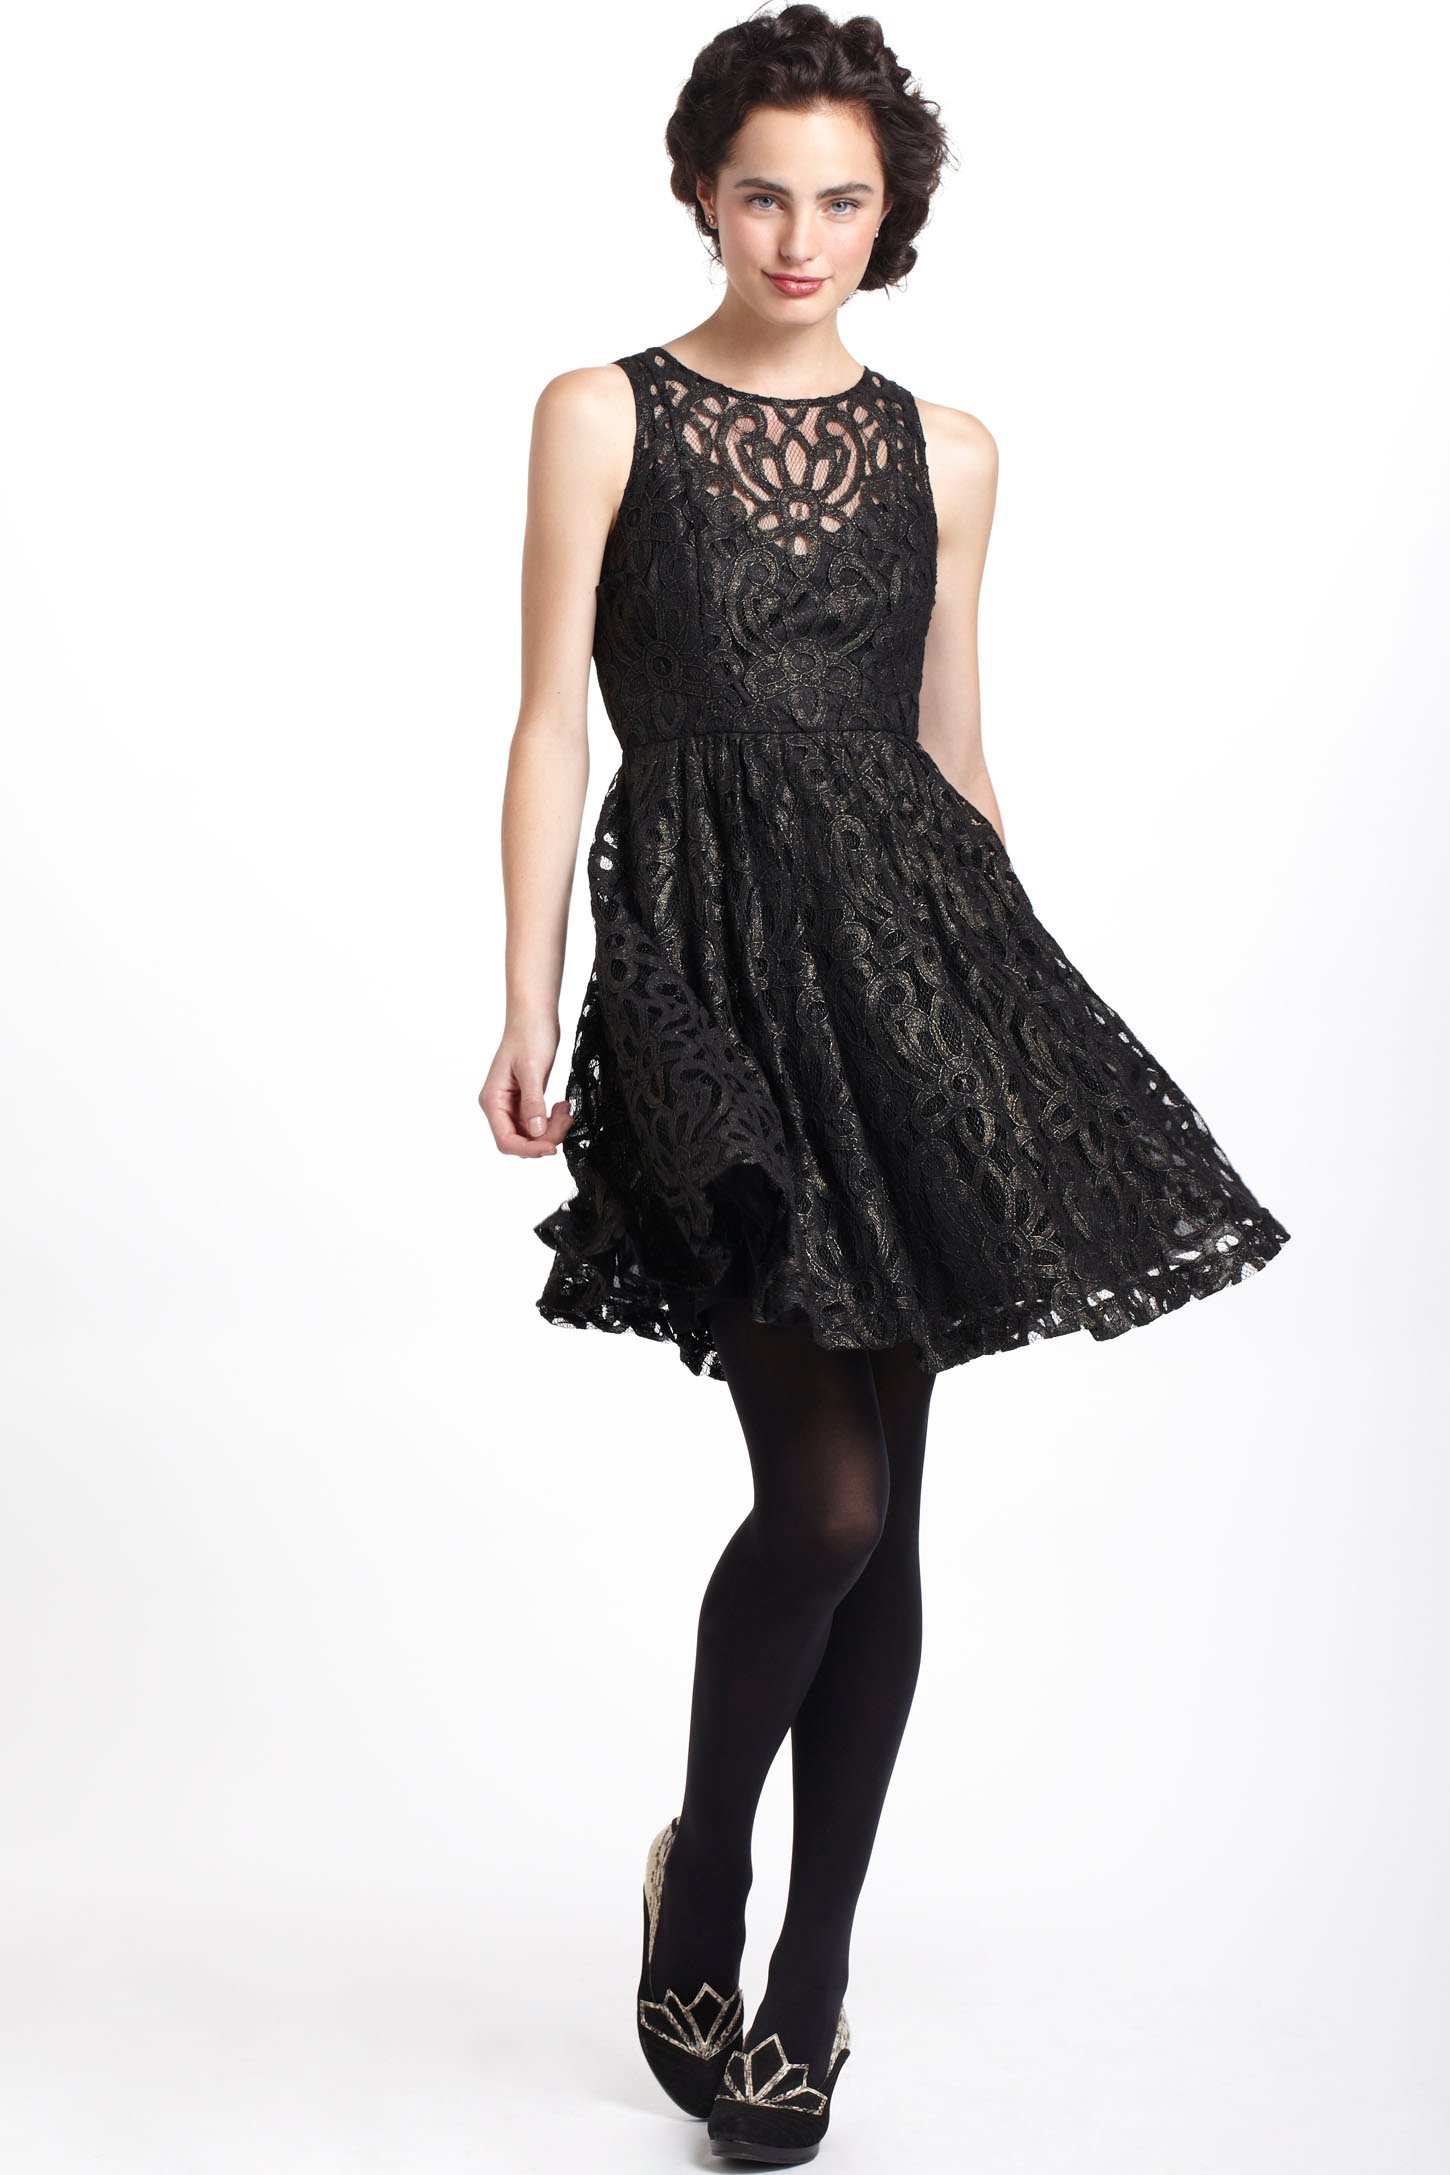 Lyst - Anthropologie Mariposa Lace Dress in Black